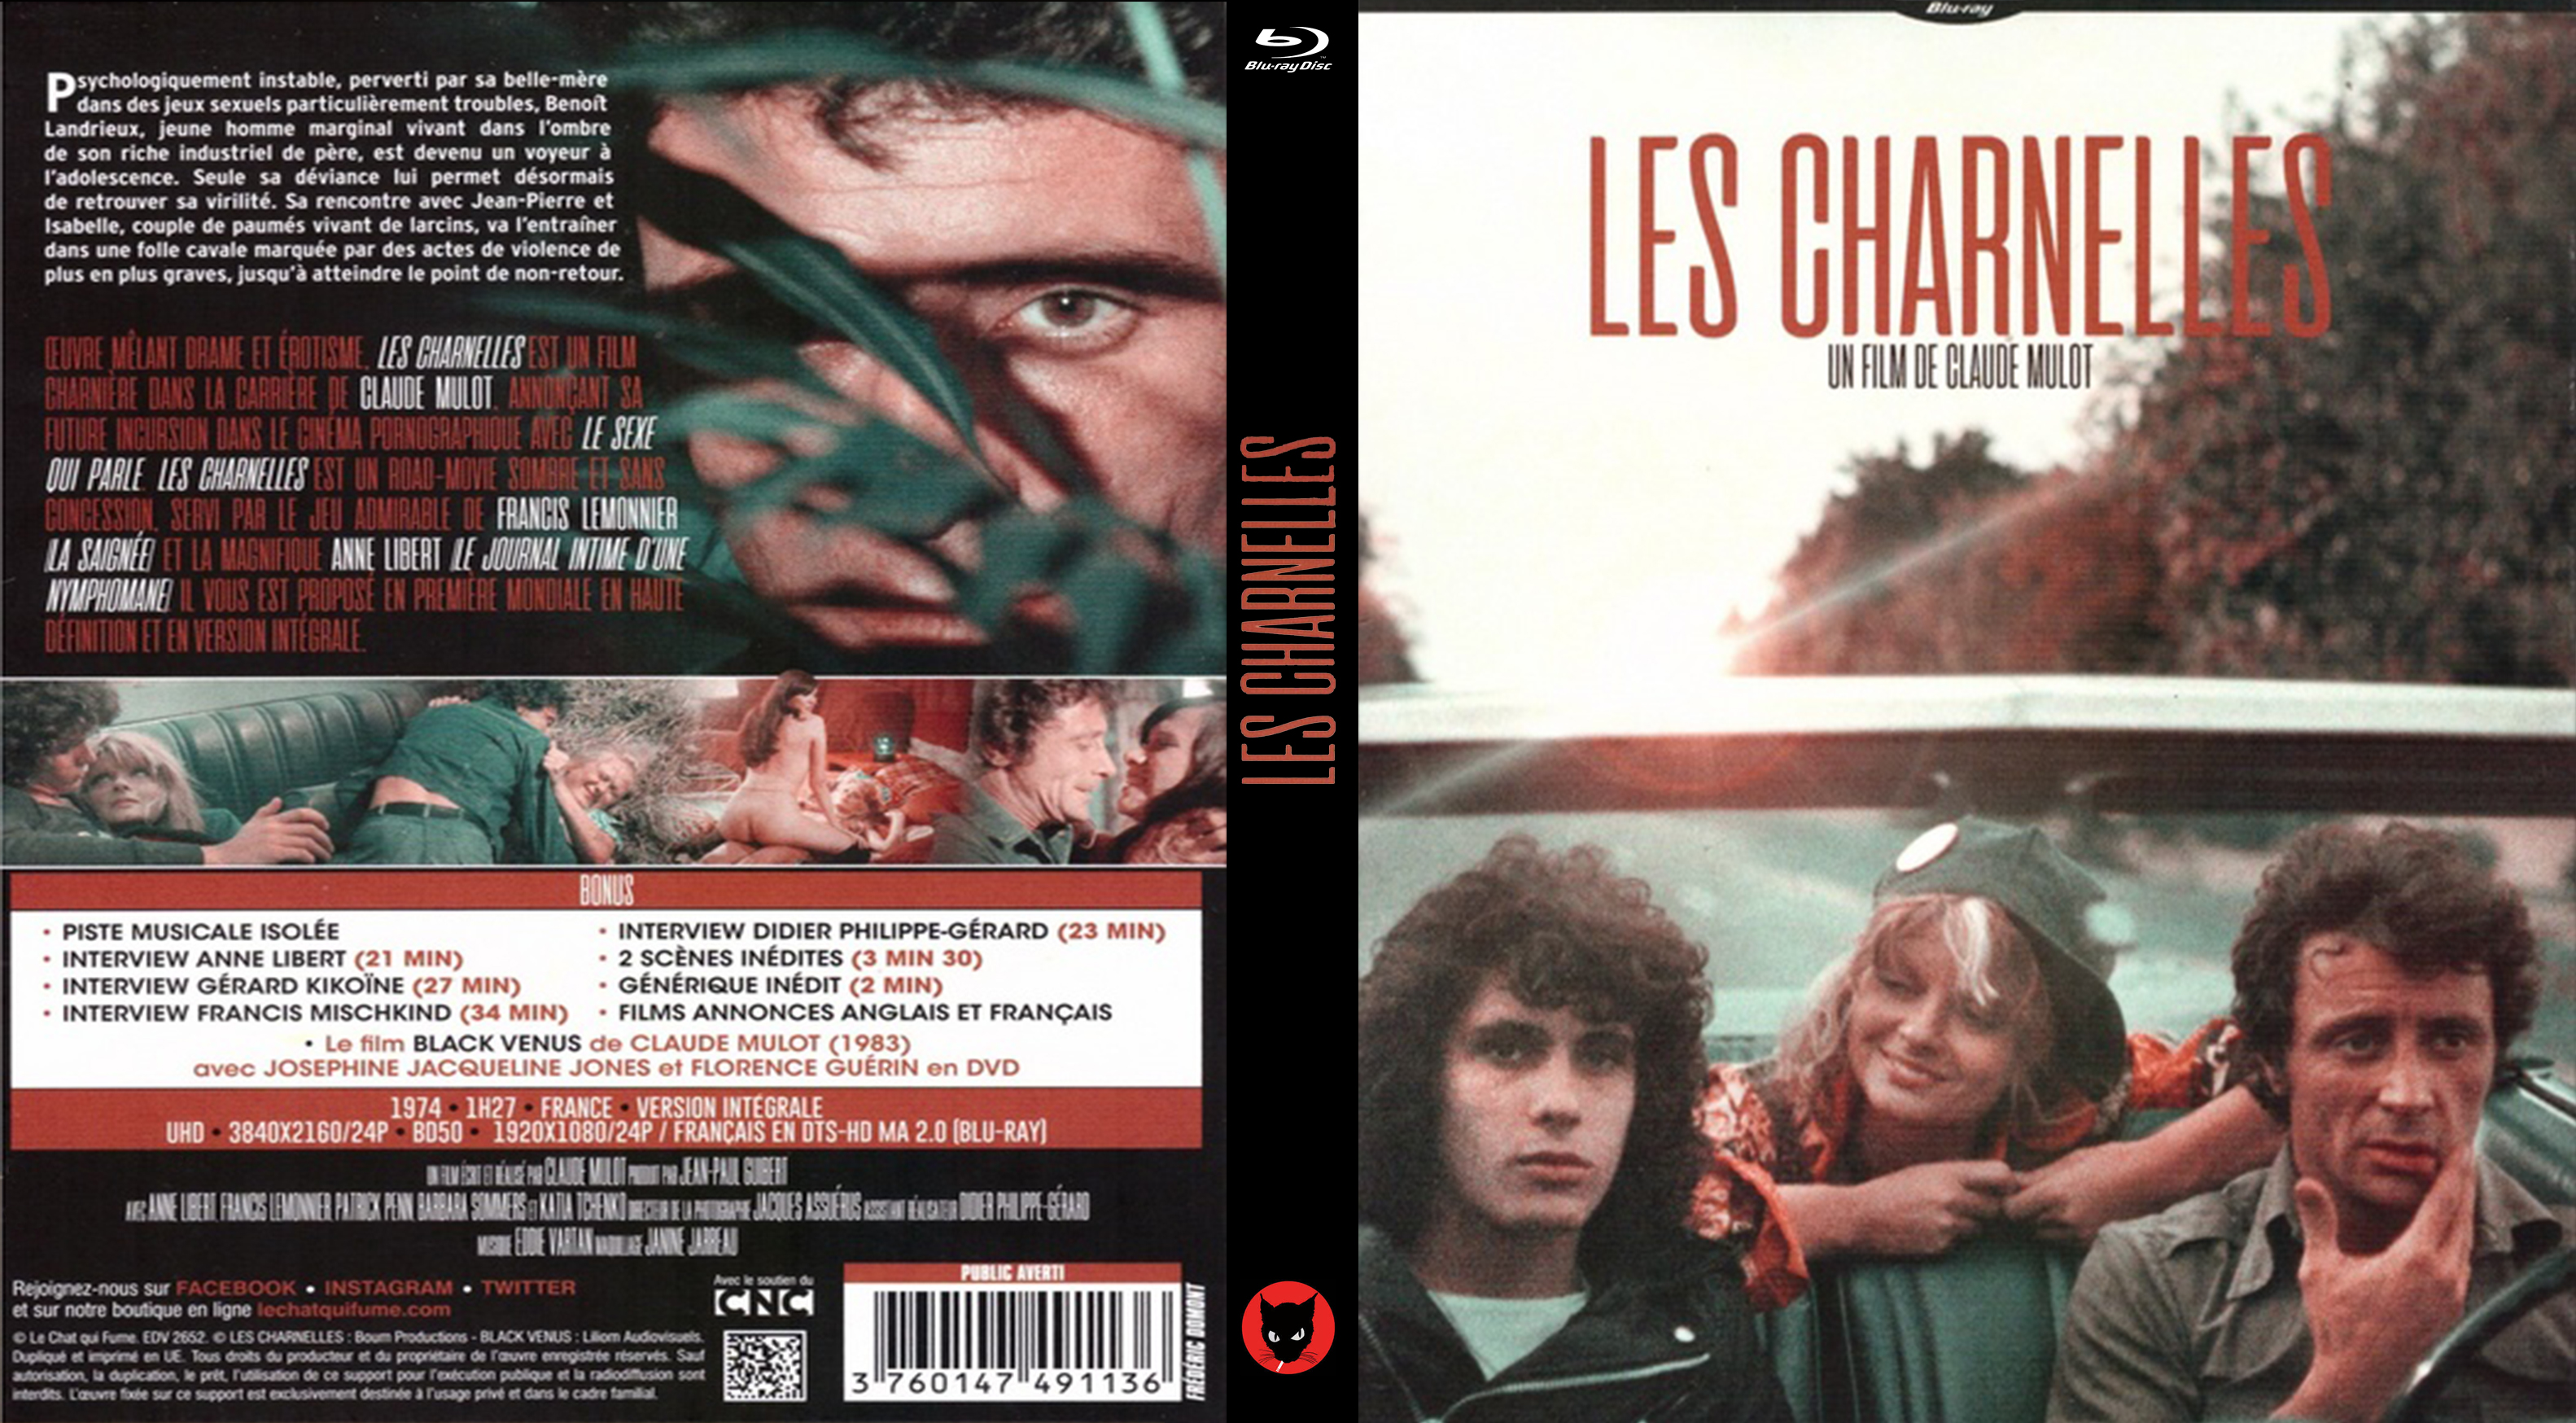 Jaquette DVD Les charnelles custom (BLU-RAY)